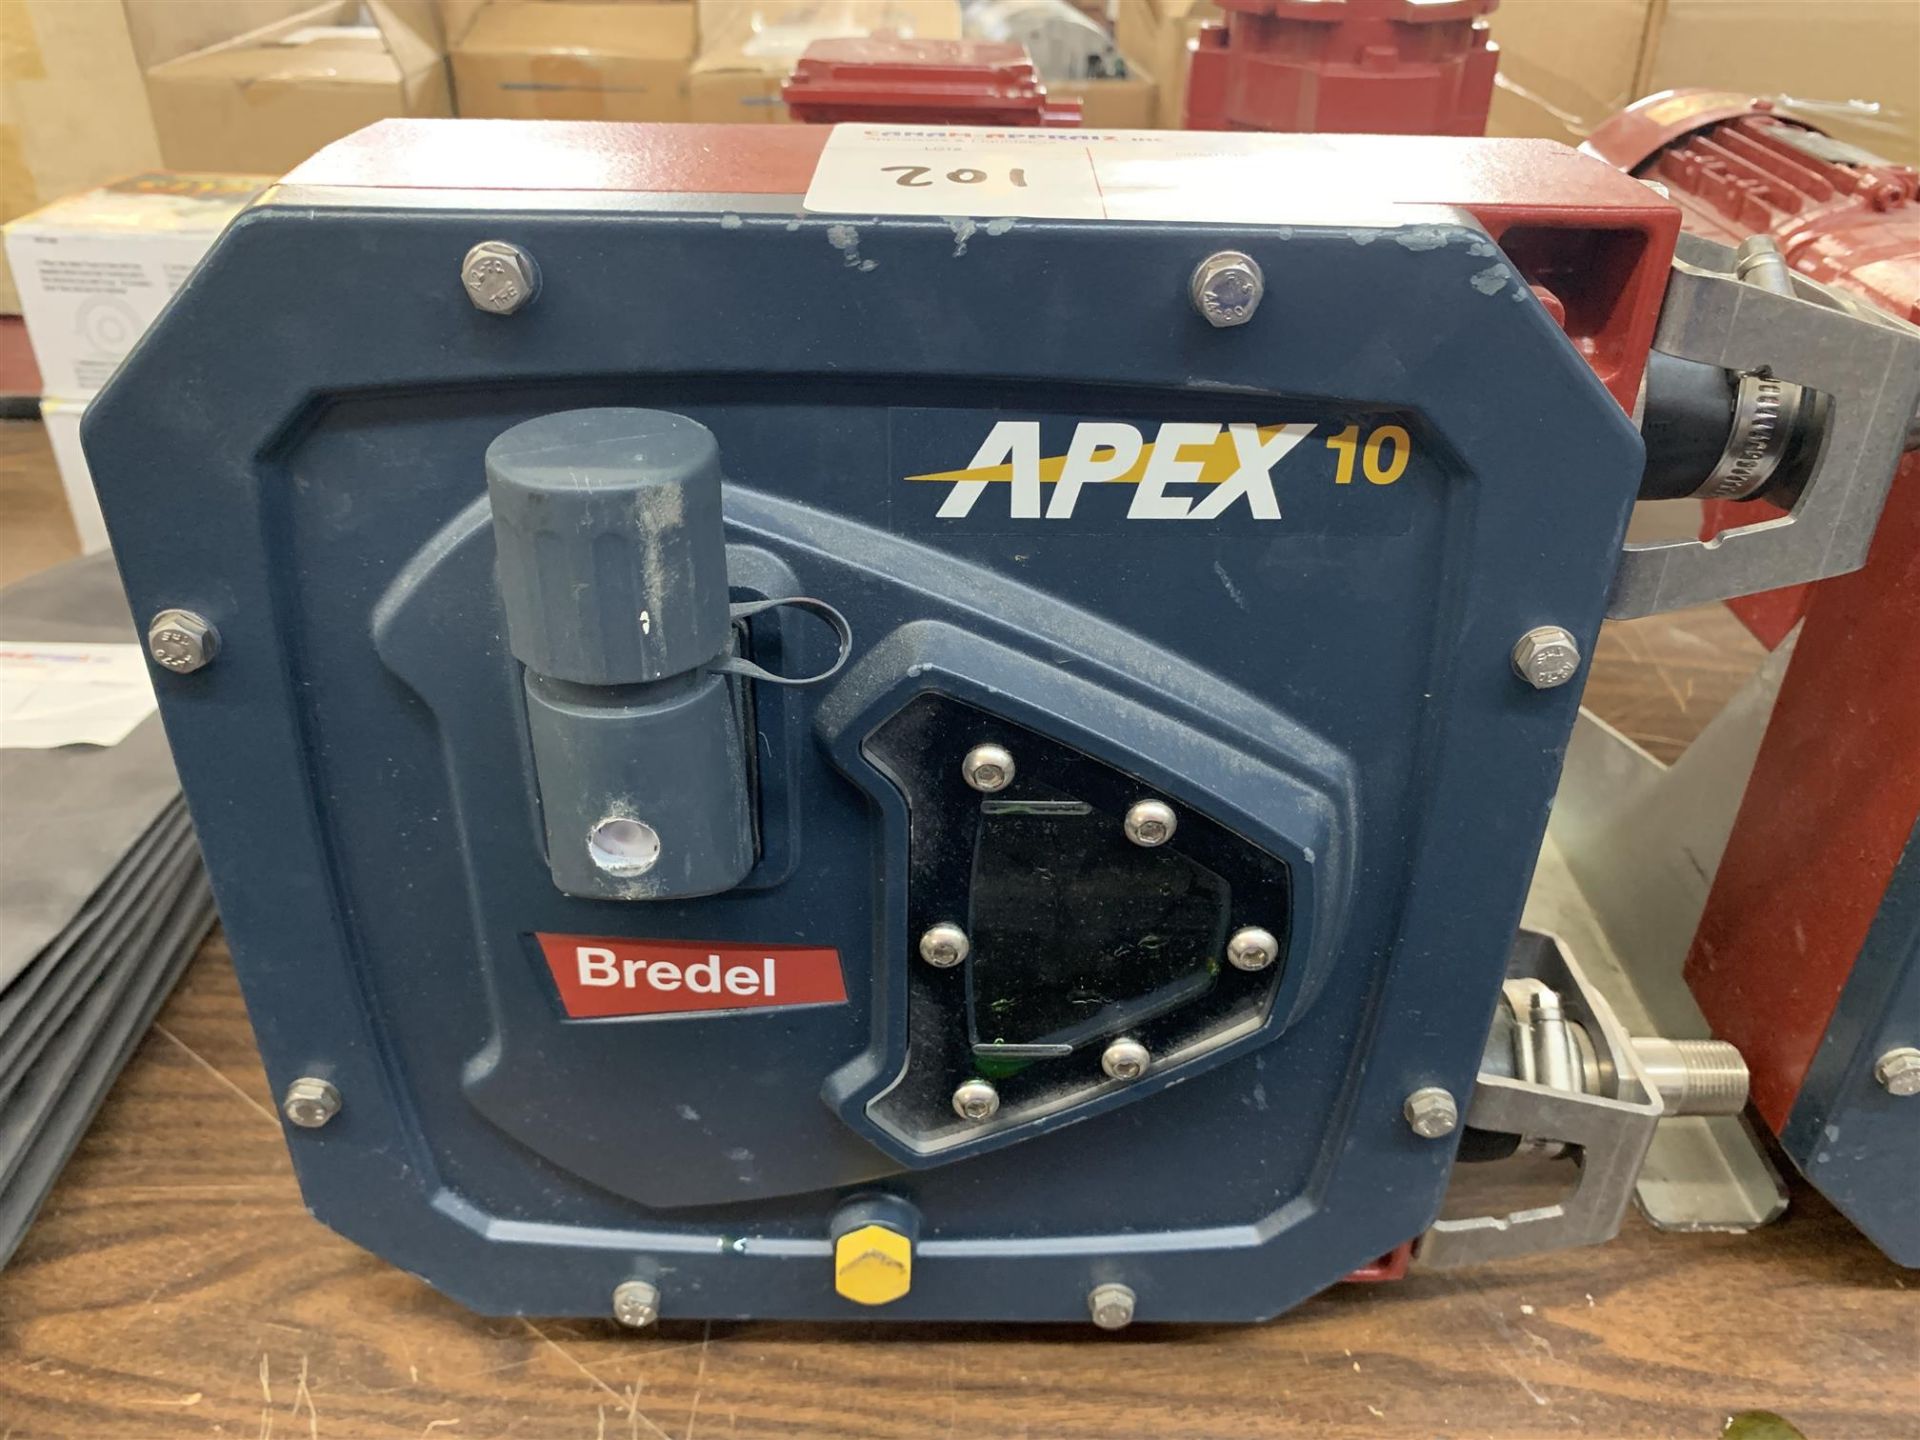 BREDEL - APEX 10 -TRANSFER DUTY HOSE PUMP - Flow Range - 2.8-280 l/hr